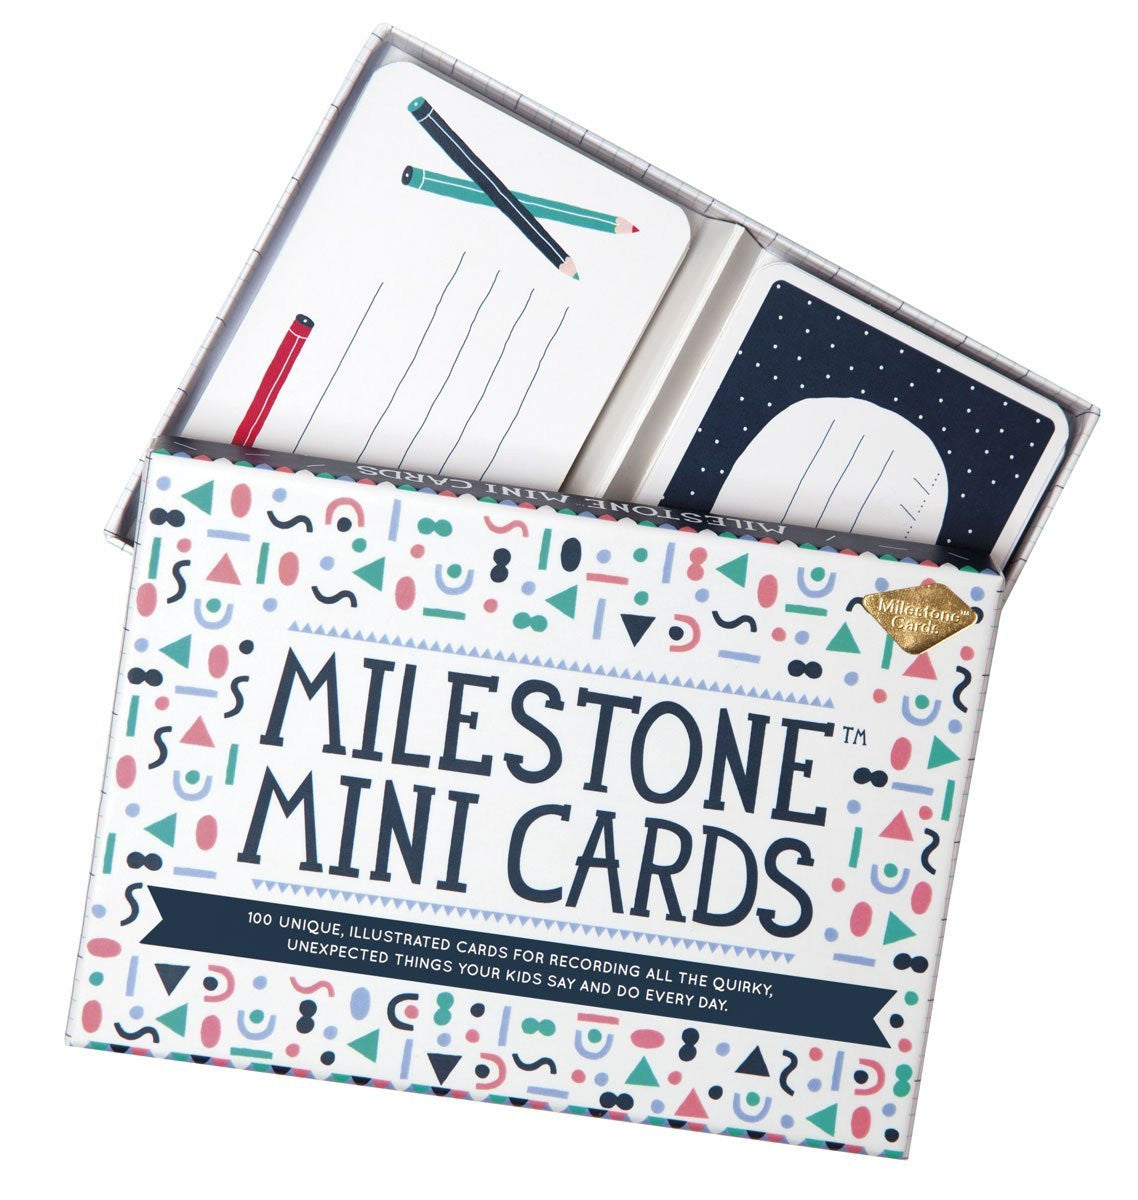 The Original Mini Cards by Milestone World